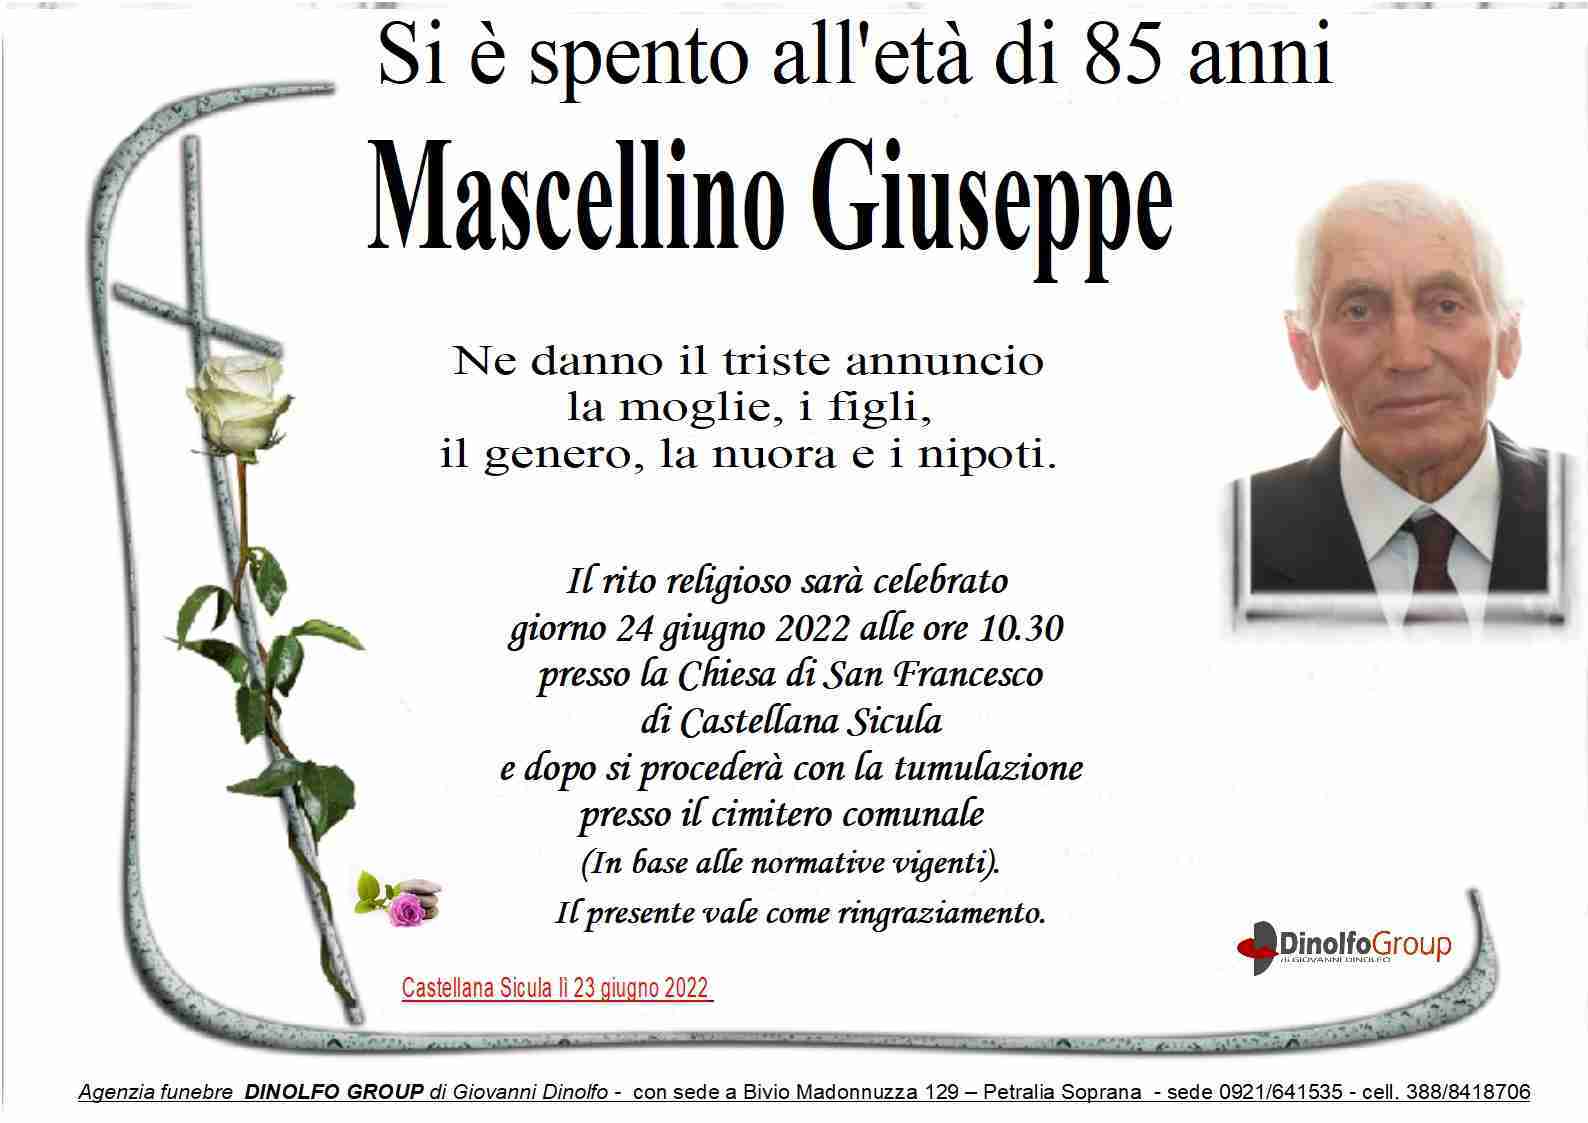 Giuseppe Mascellino